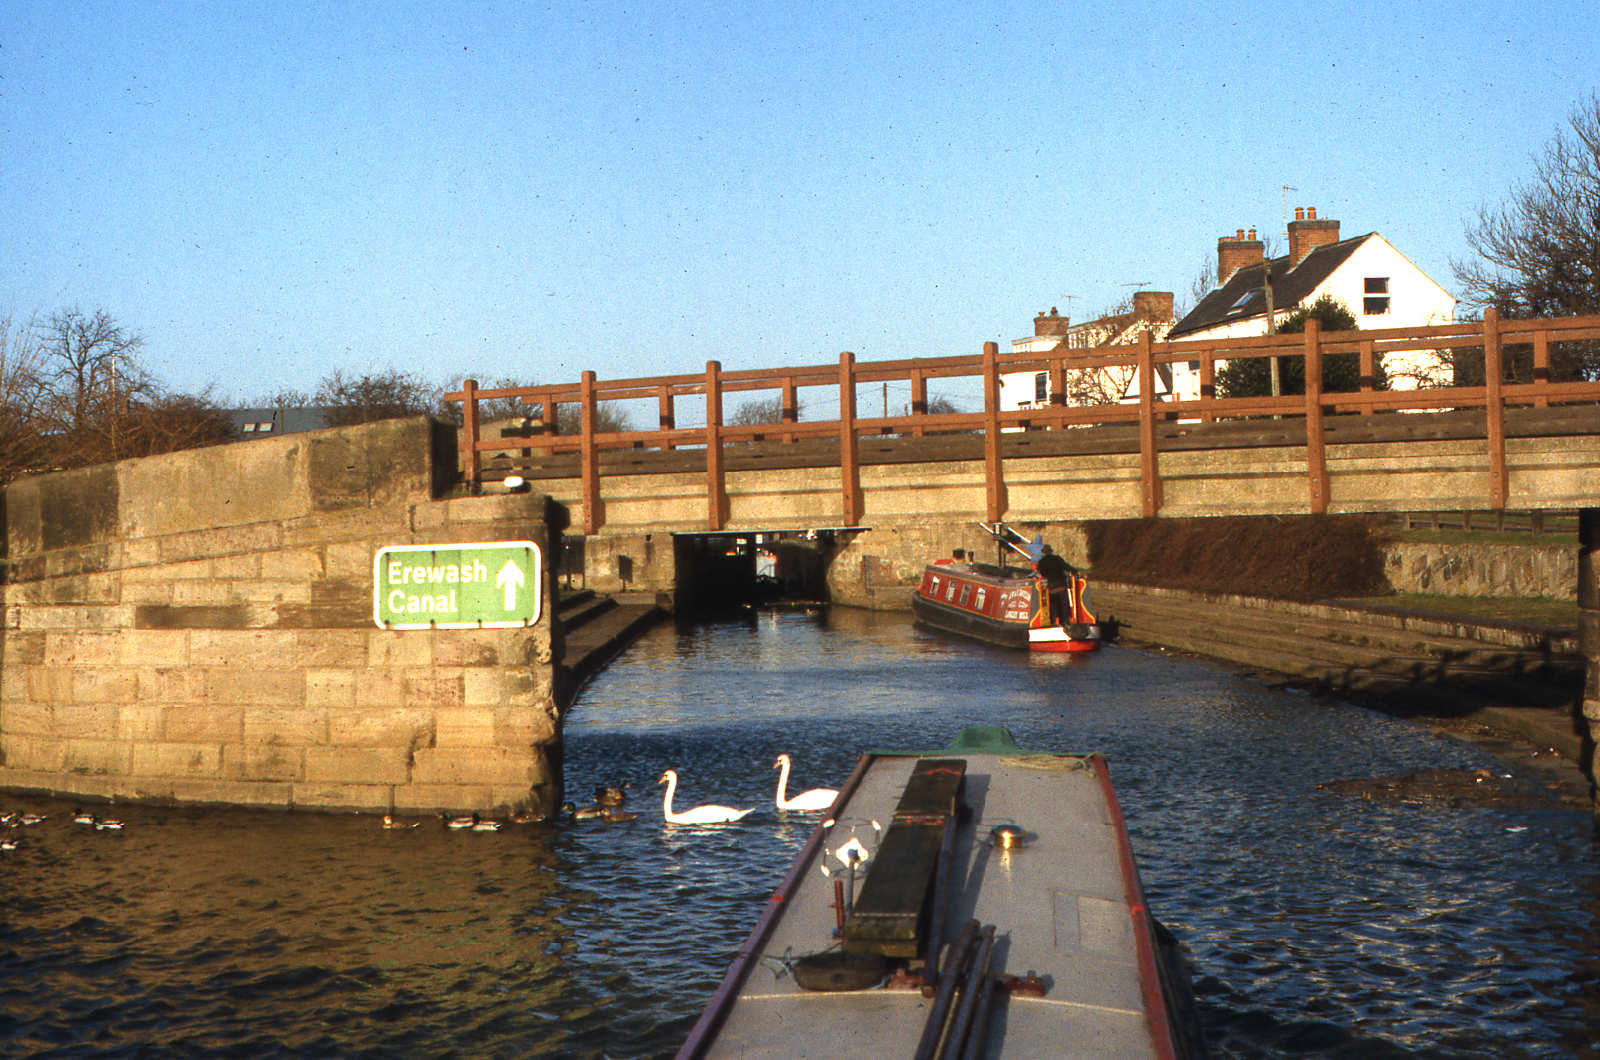 Entering the Erewash Canal